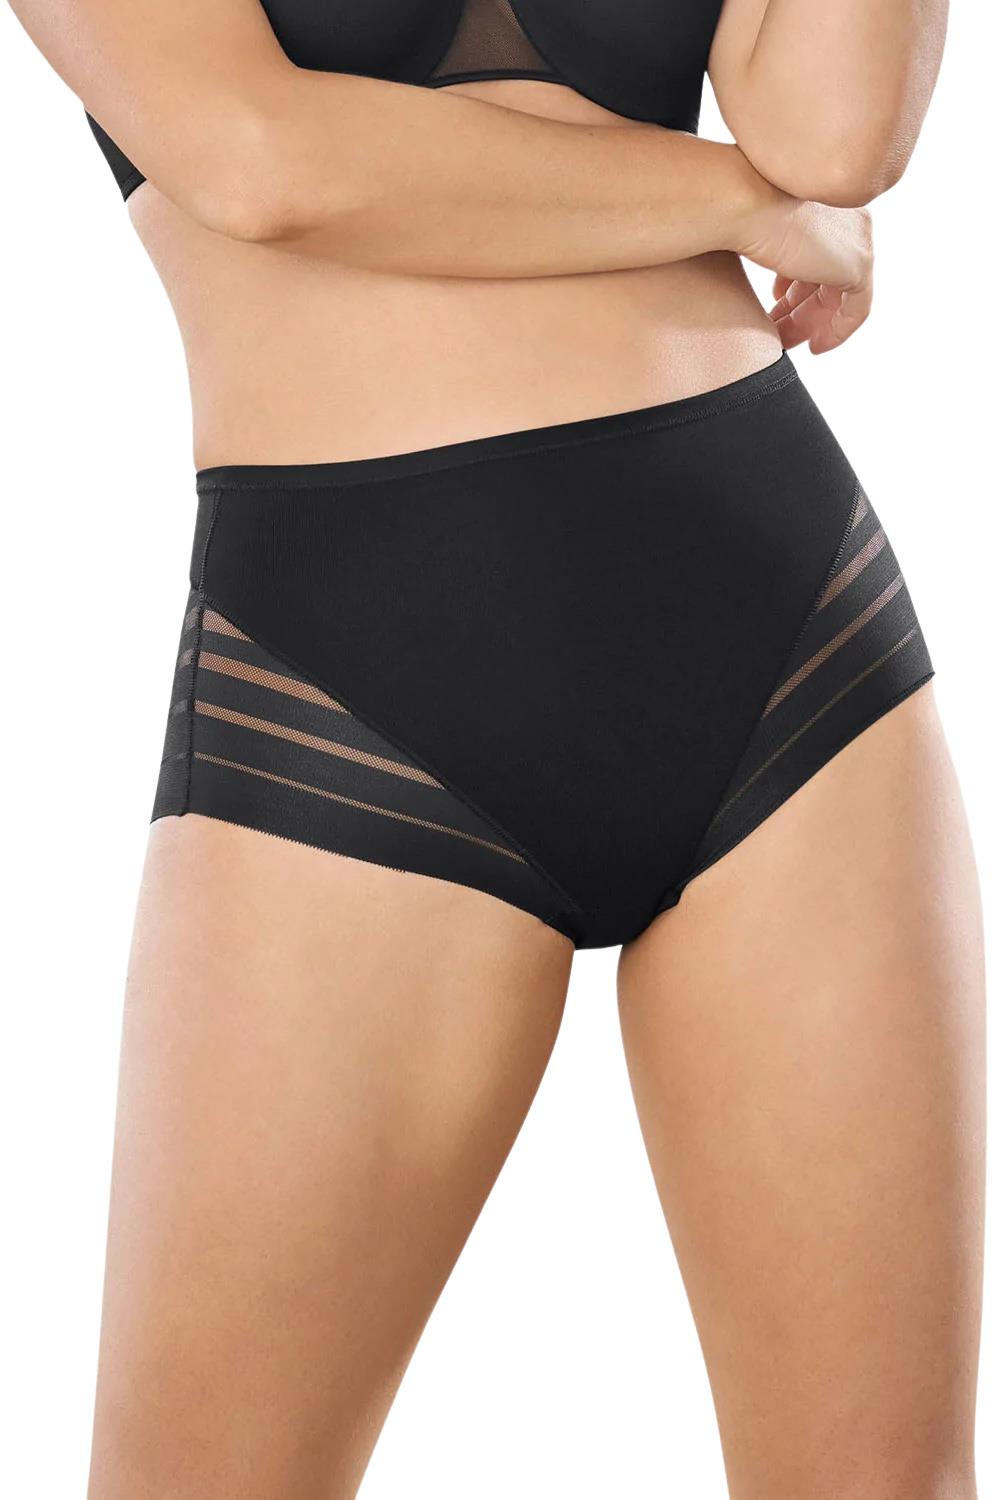 Leonisa Lace Stripe Undetectable Clasic Shaper Panty - Uplift